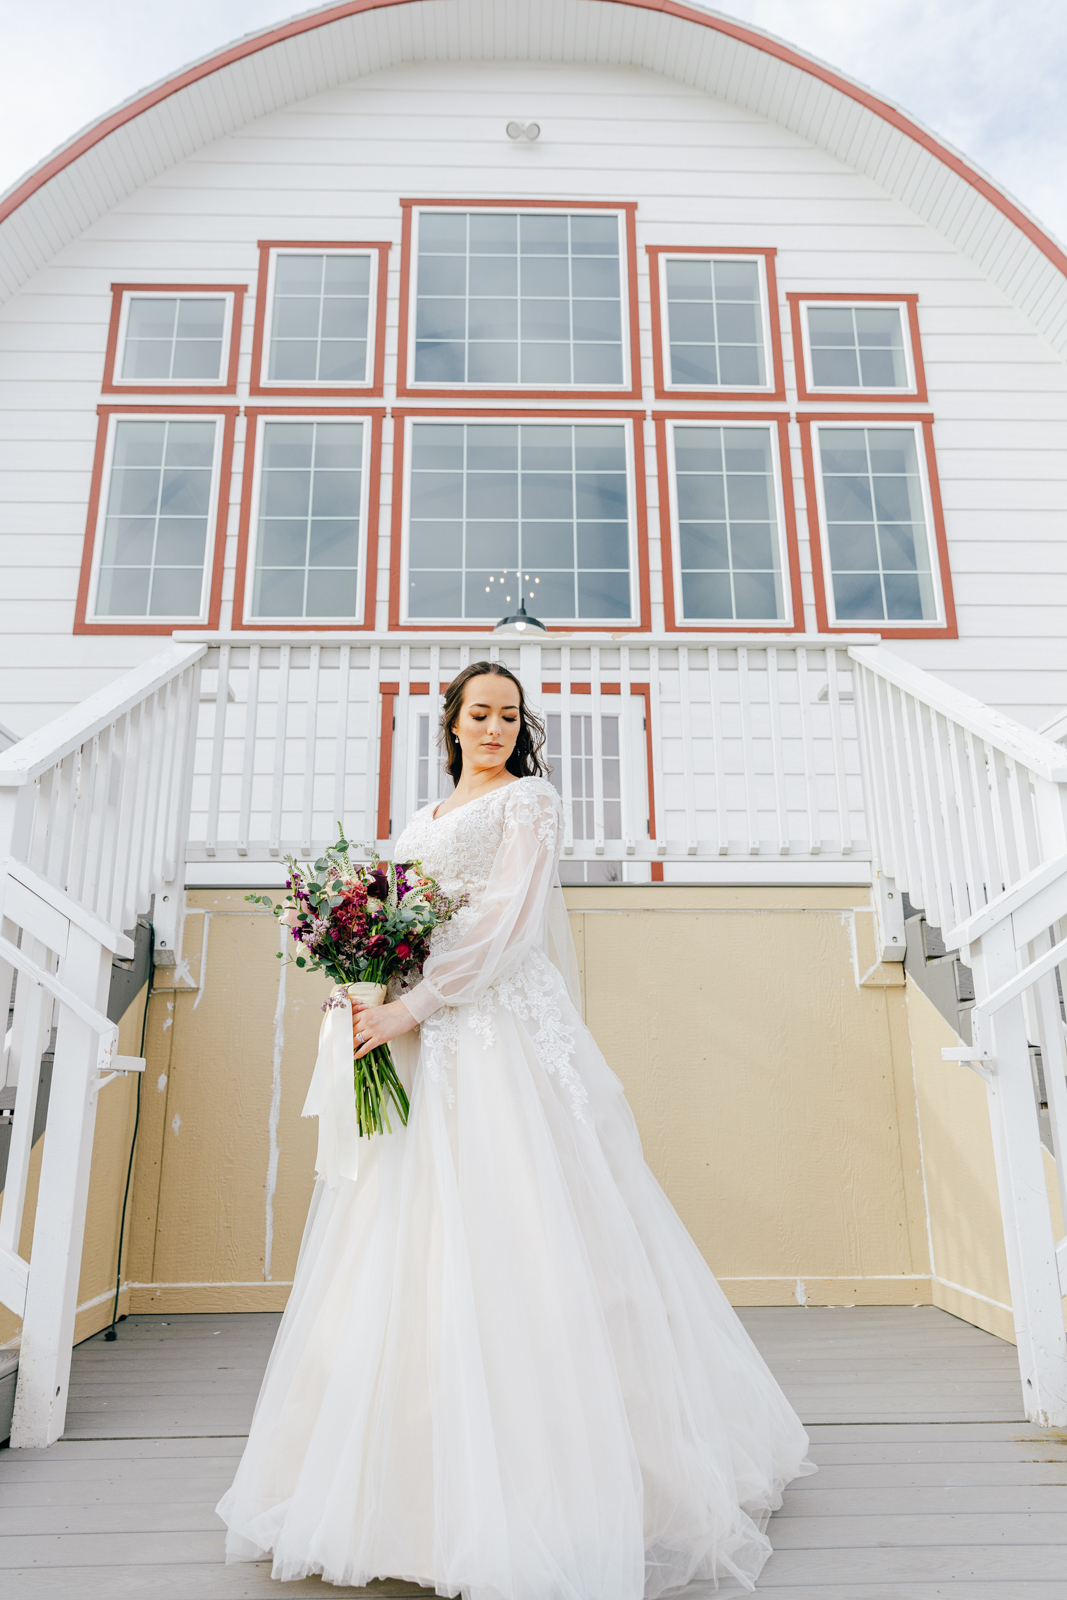 Jackson Hole wedding photographer captures Idaho Falls Barn Venue bride